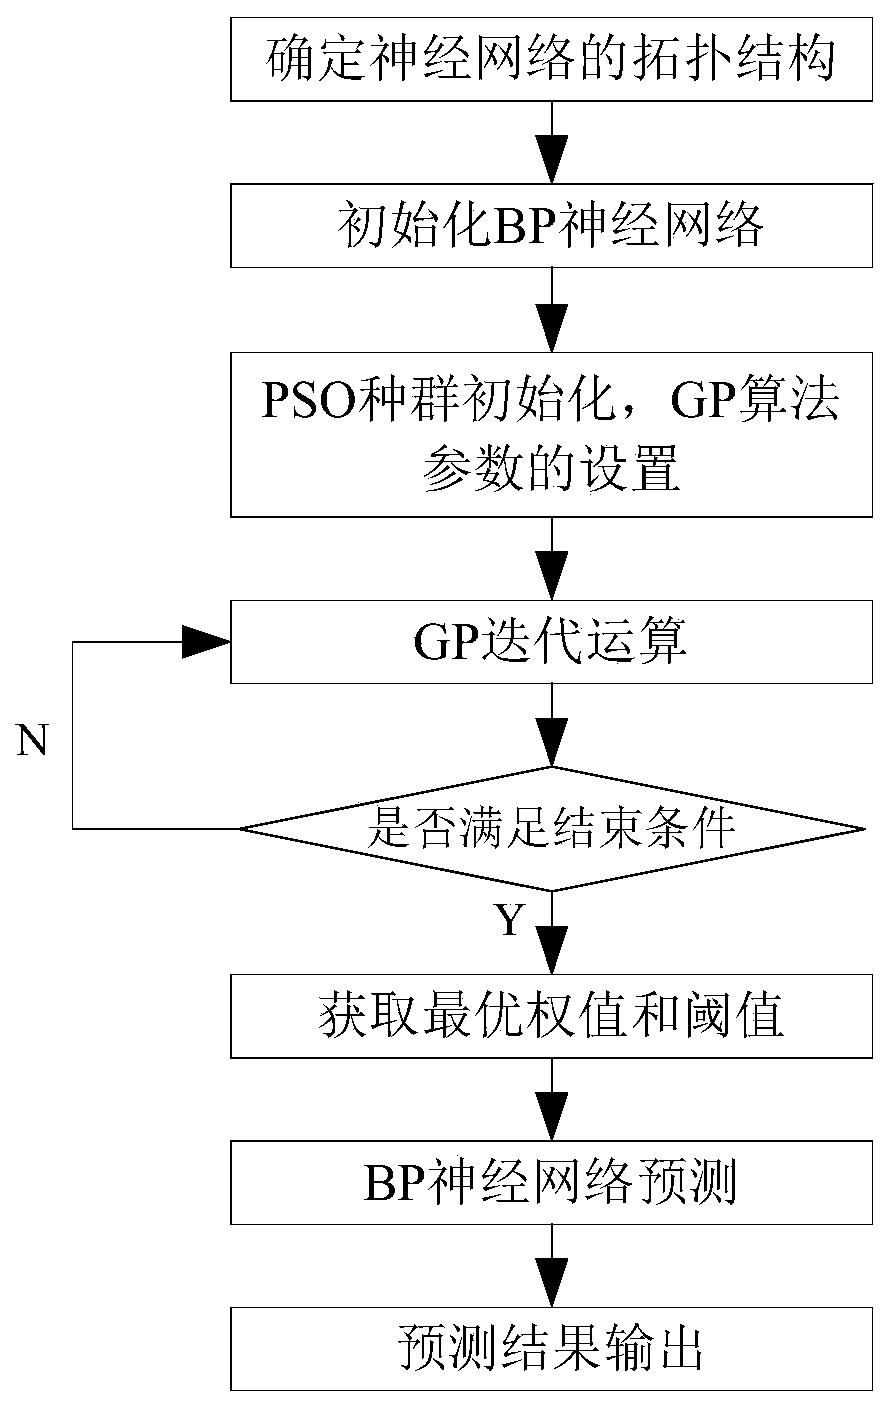 Probability integral parameter prediction method for optimizing BP neural network based on MIV-GP algorithm